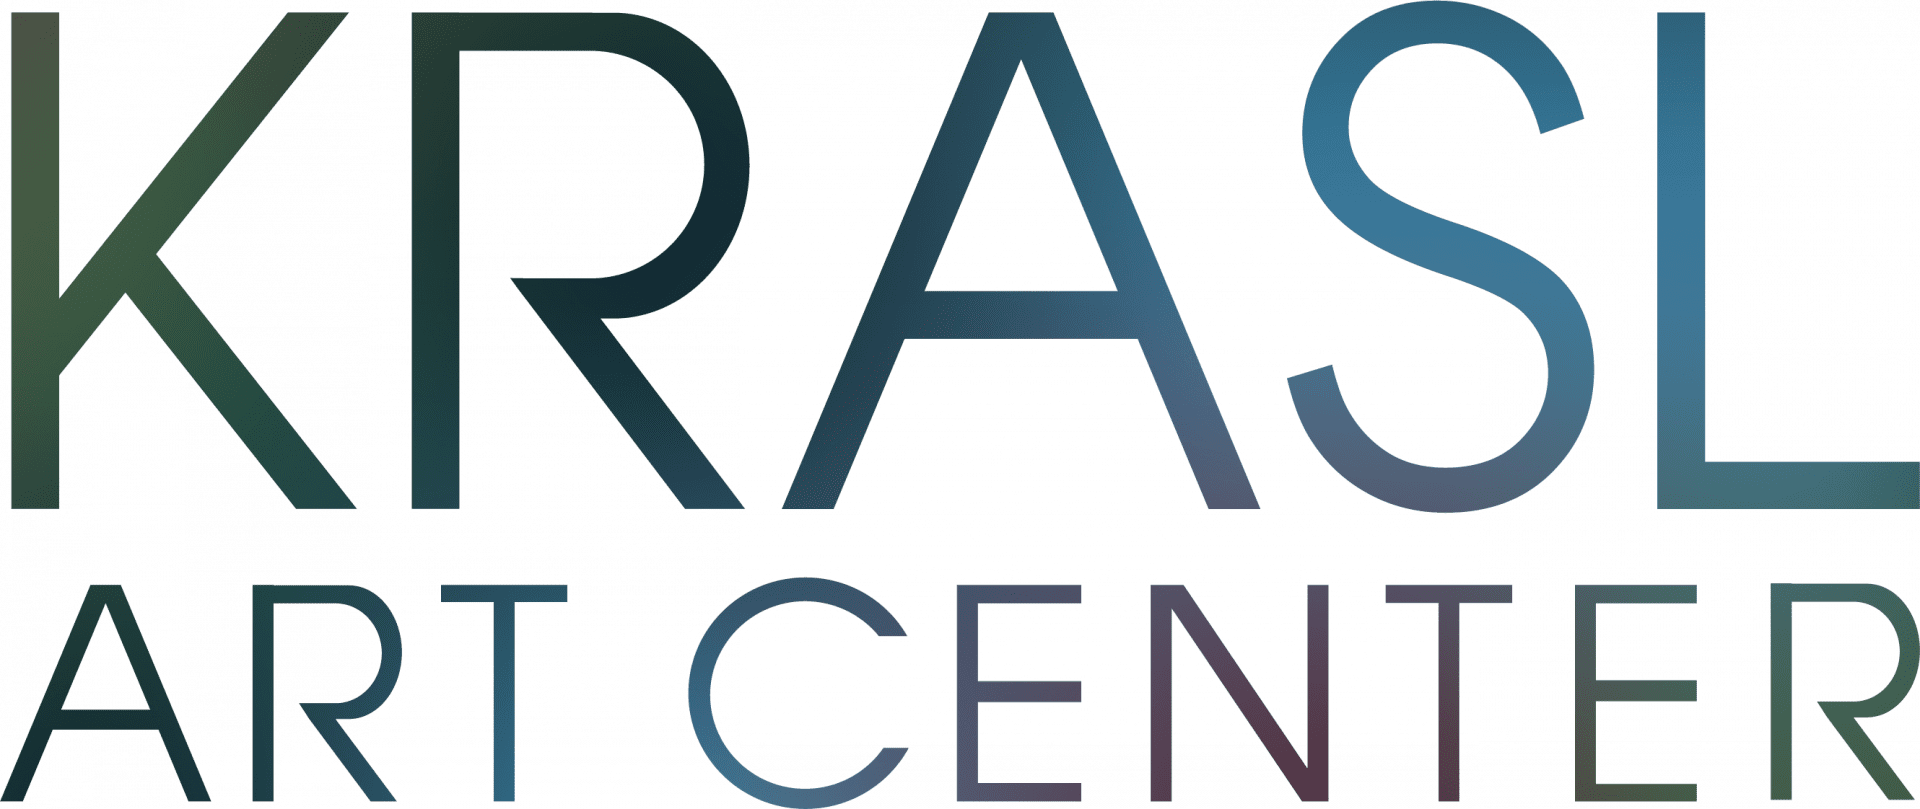 Krassl Art Center logo